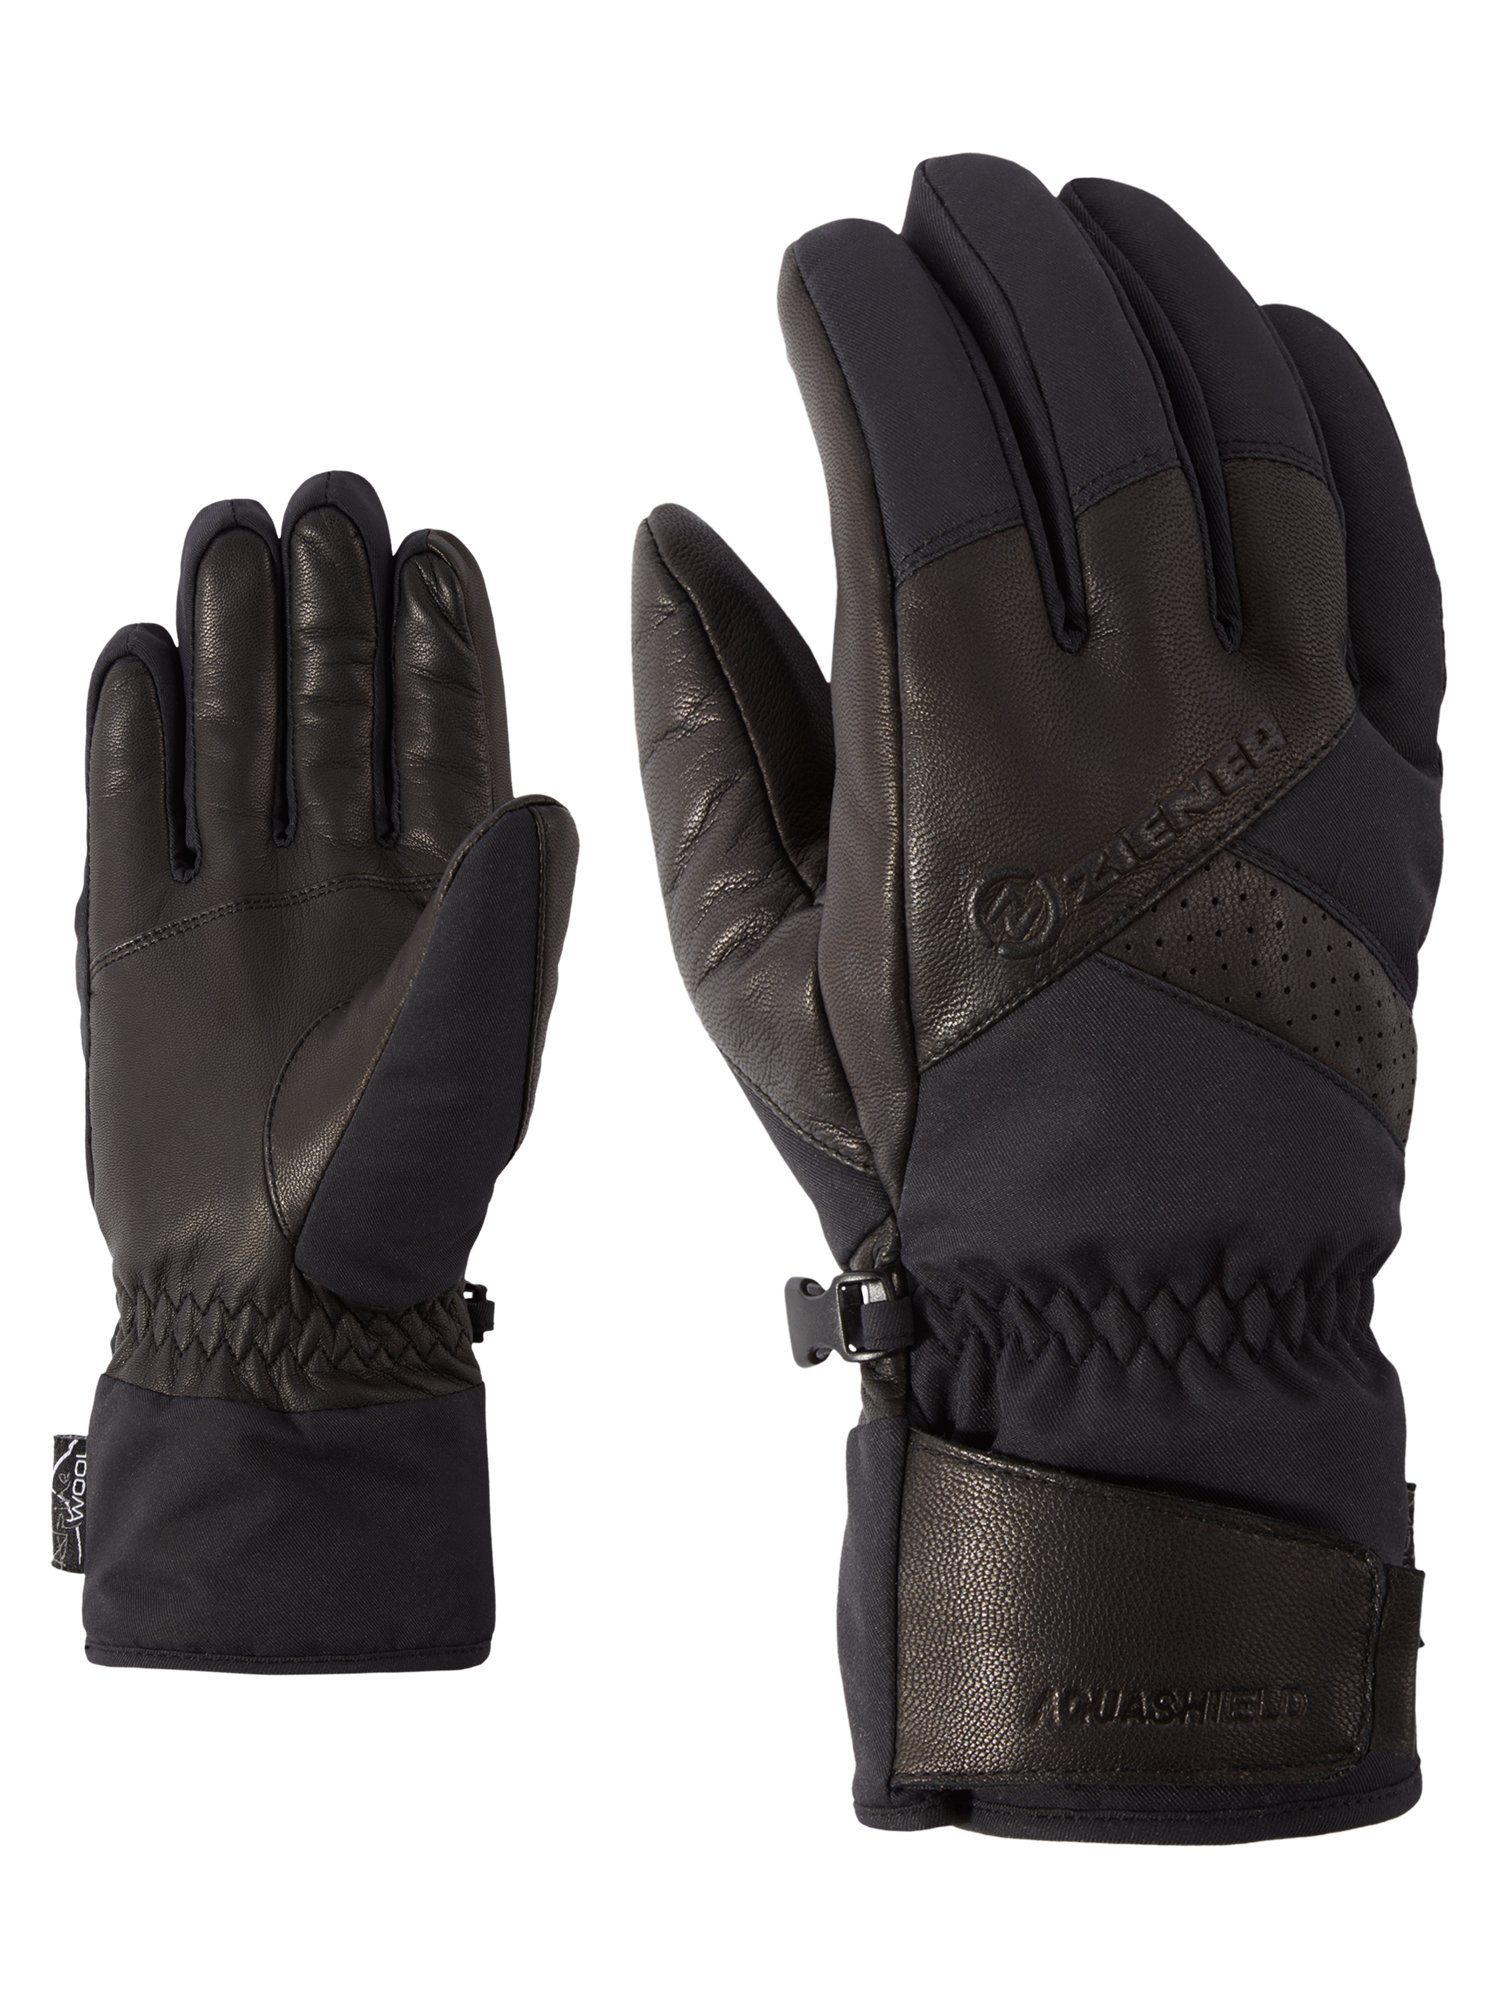 Ziener Skihandschuhe GETTER AS (R) AW schwarz | Handschuhe